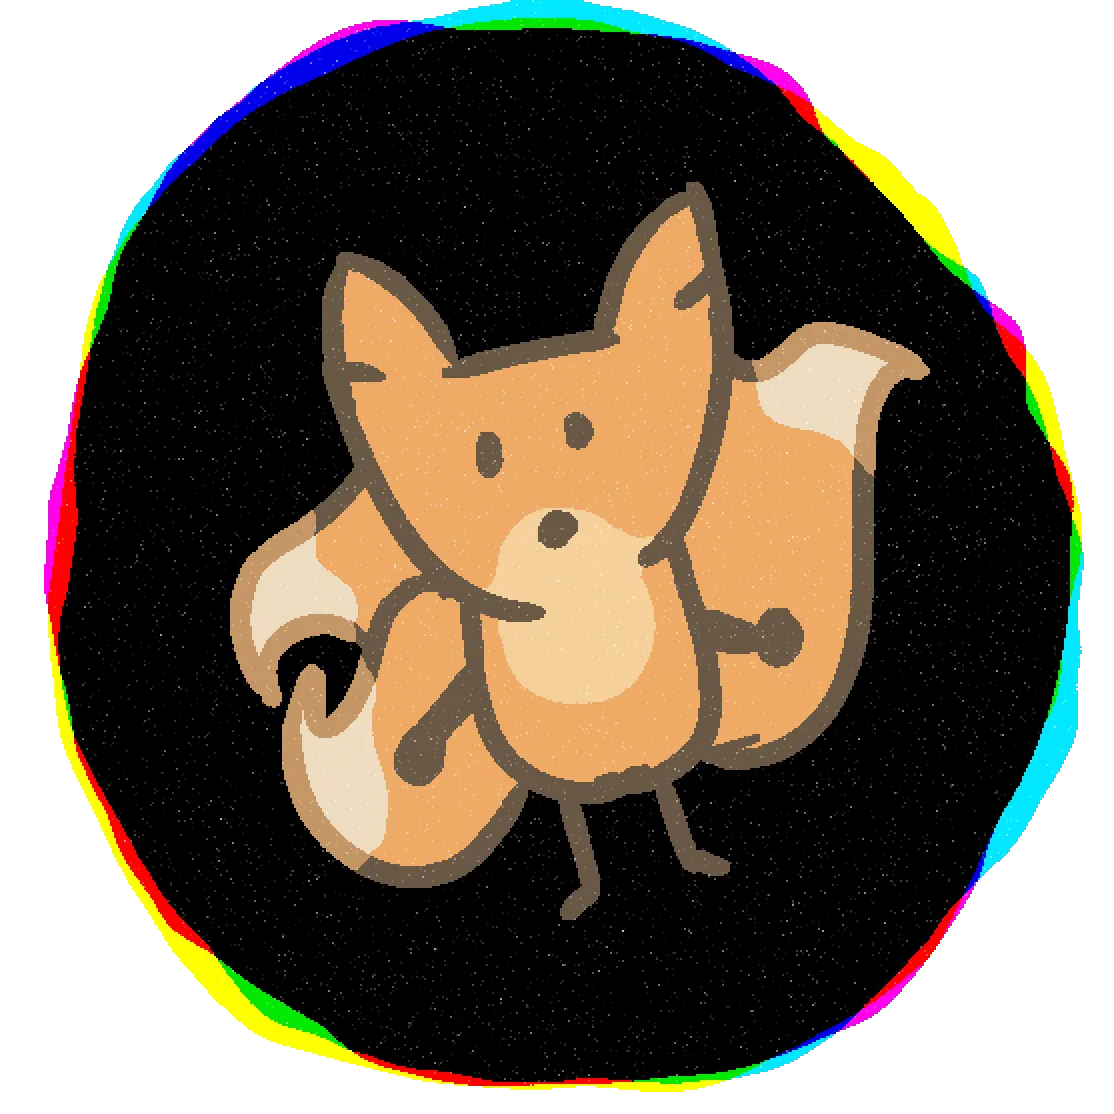 A three tailed fox inside a black hole